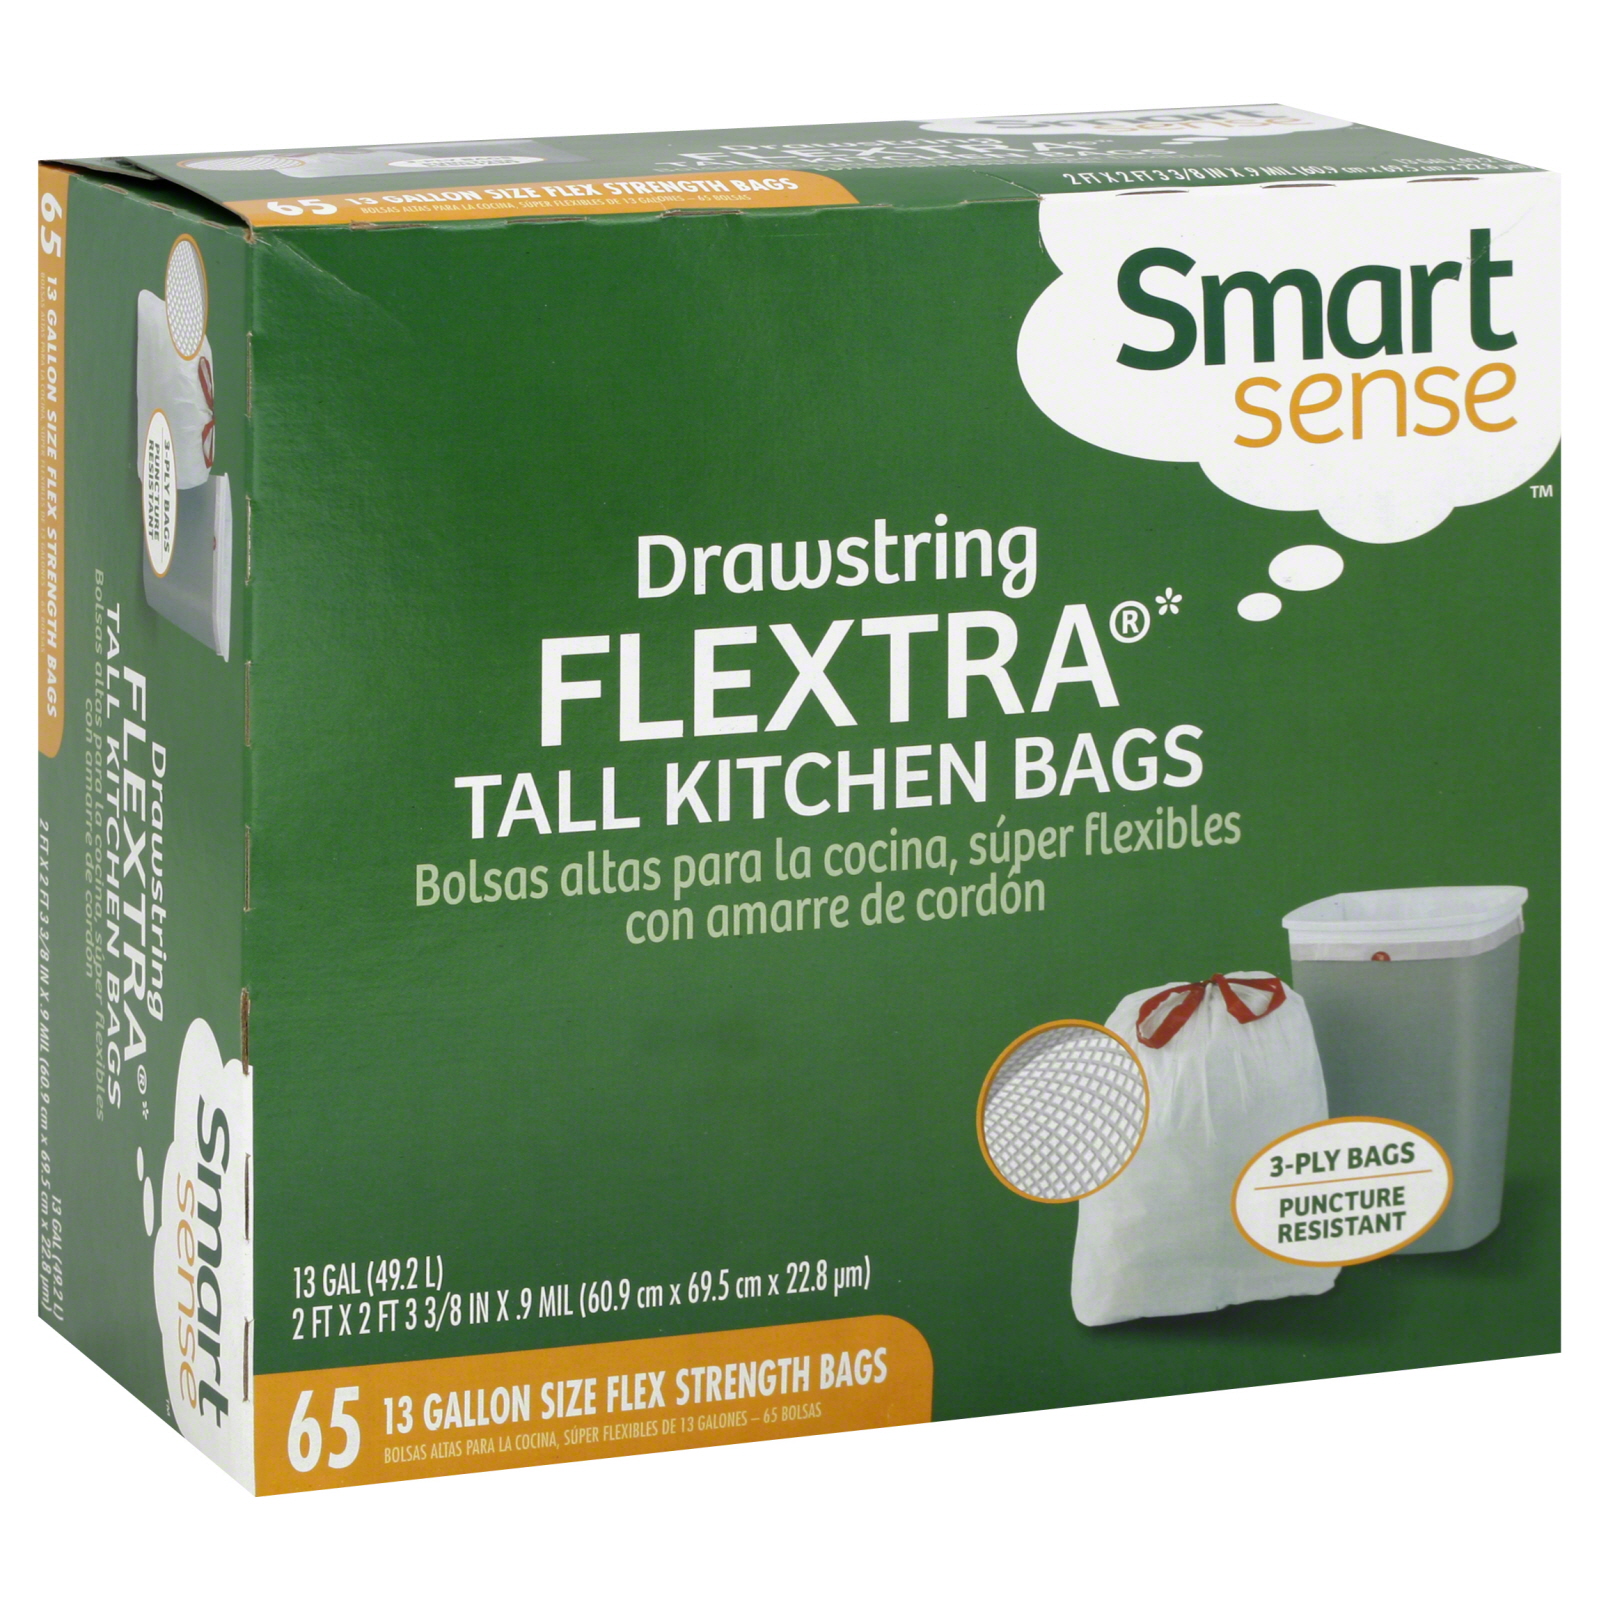 Smart Sense Tall Kitchen Bags, Drawstring Flextra, 13 Gallon, 65 bags